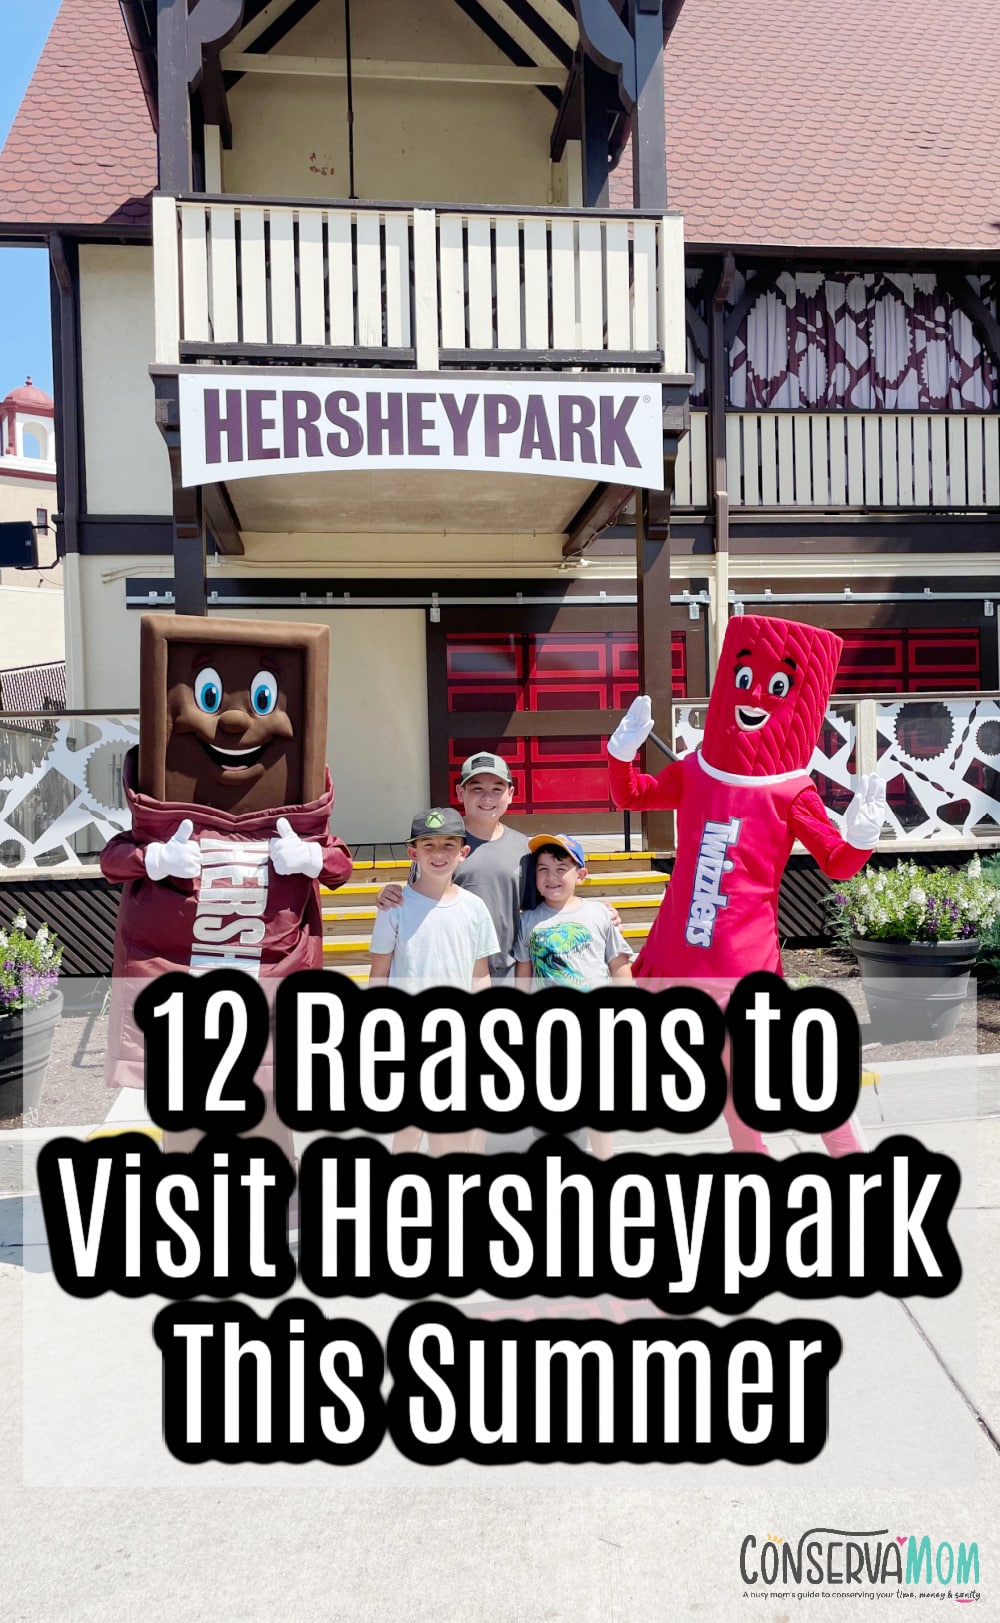 12 Reasons to Visit Hersheypark